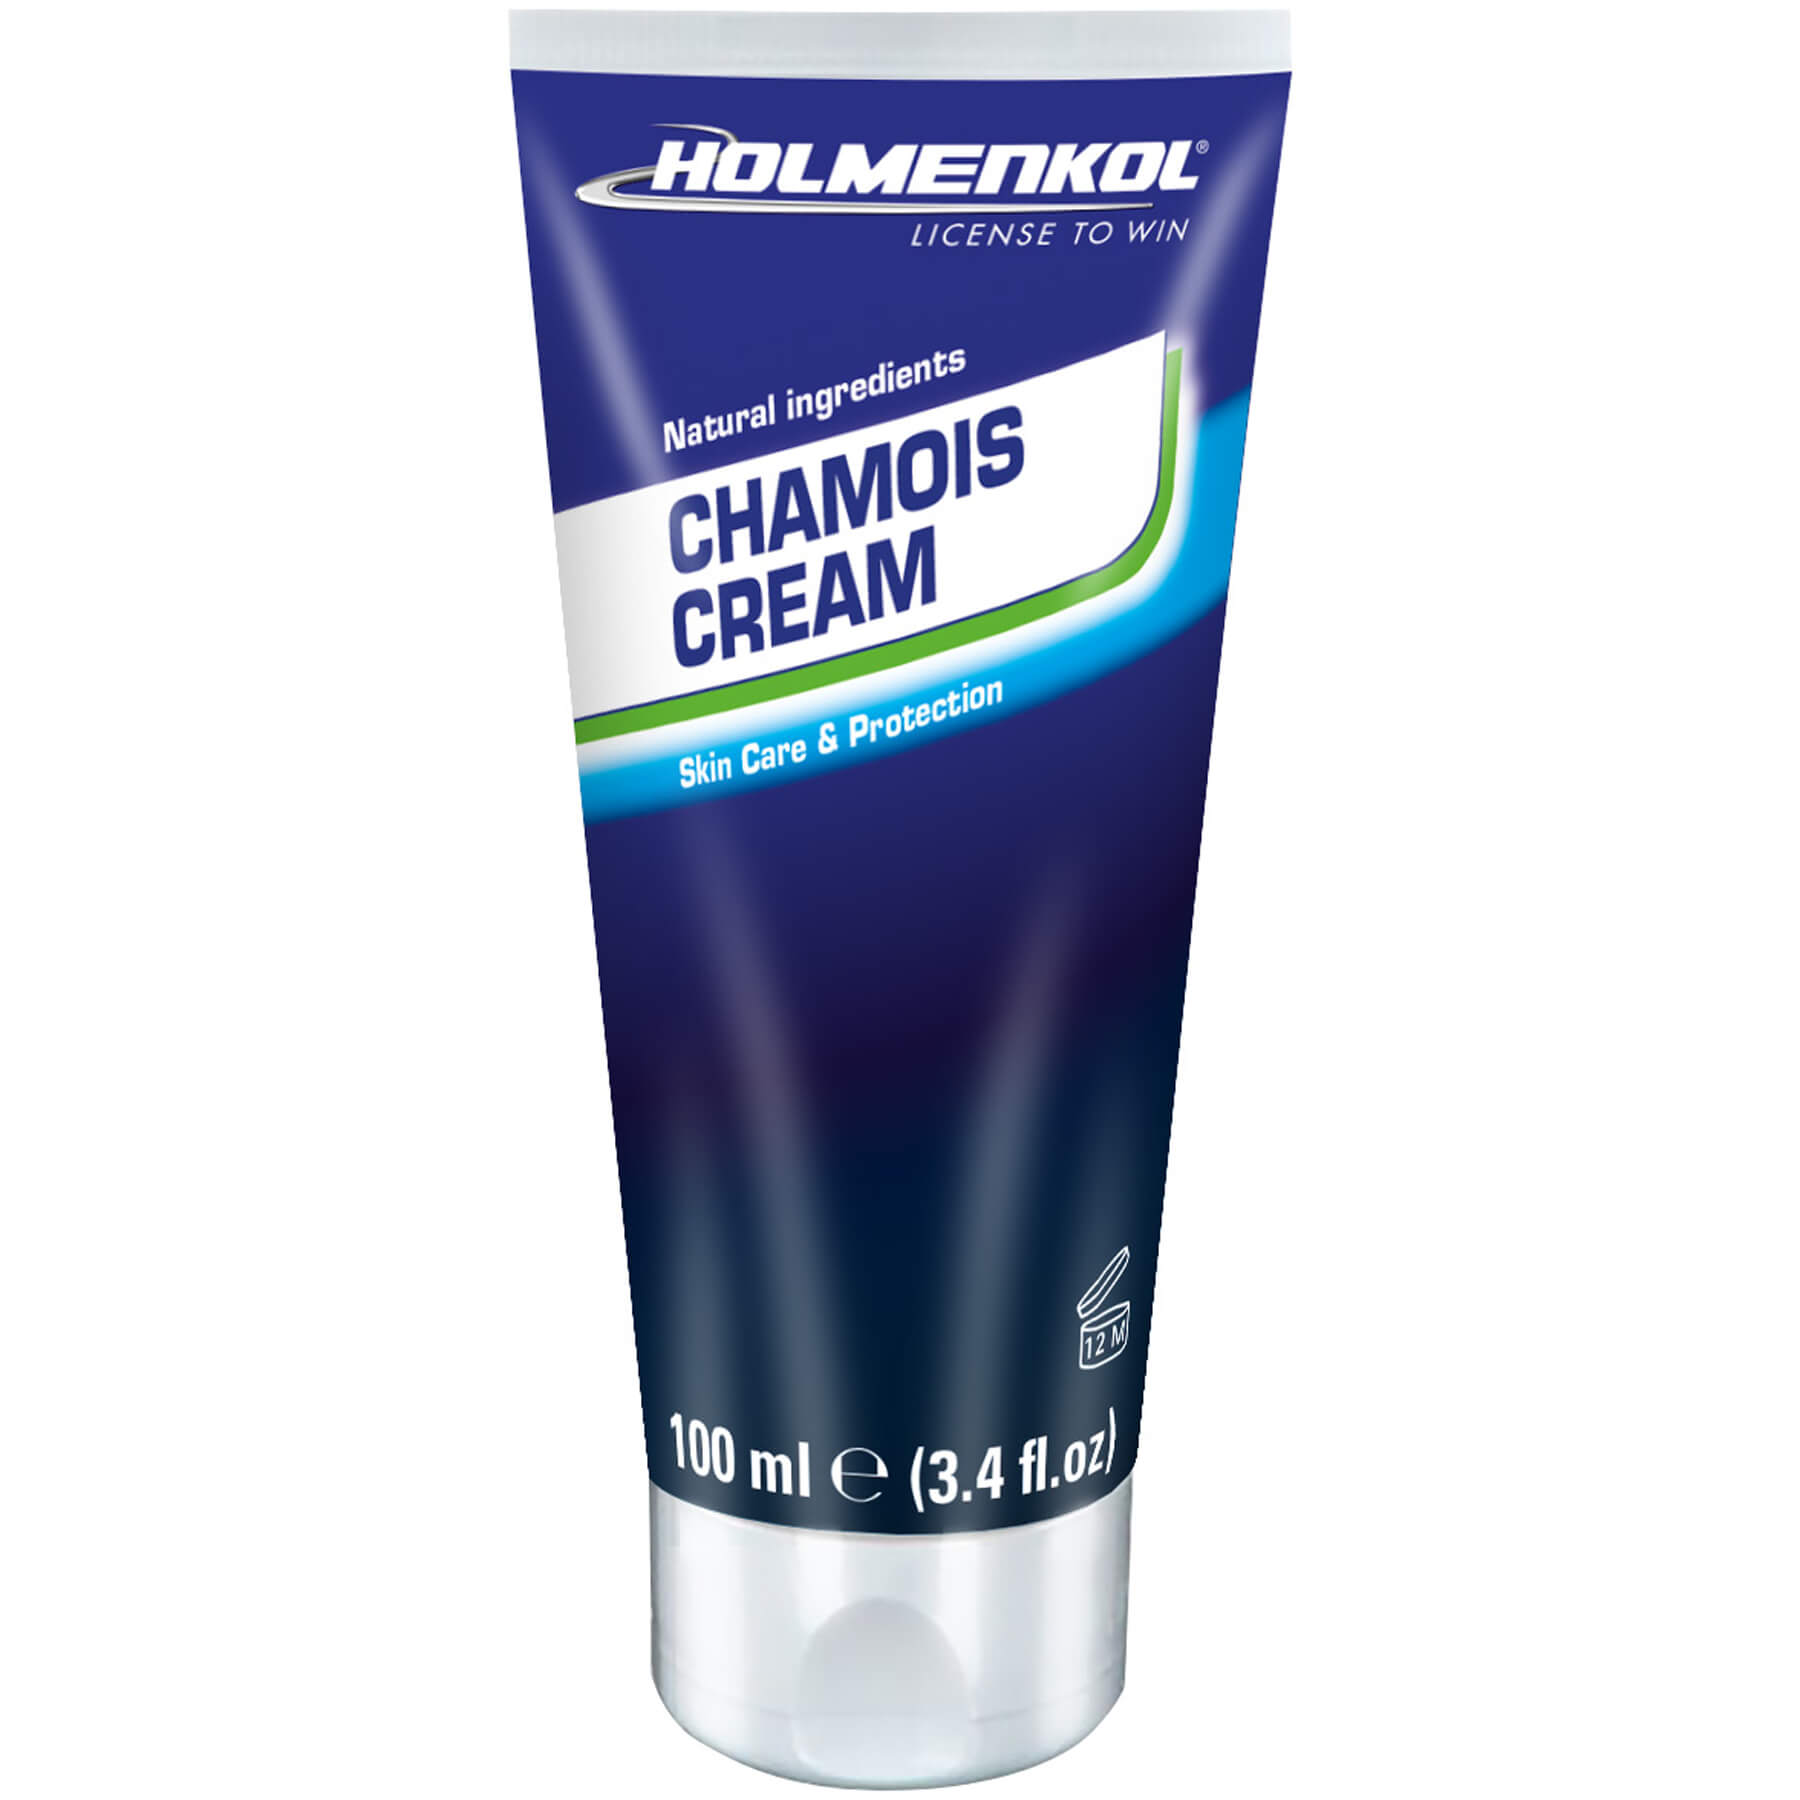 Holmenkol Chamois Cream